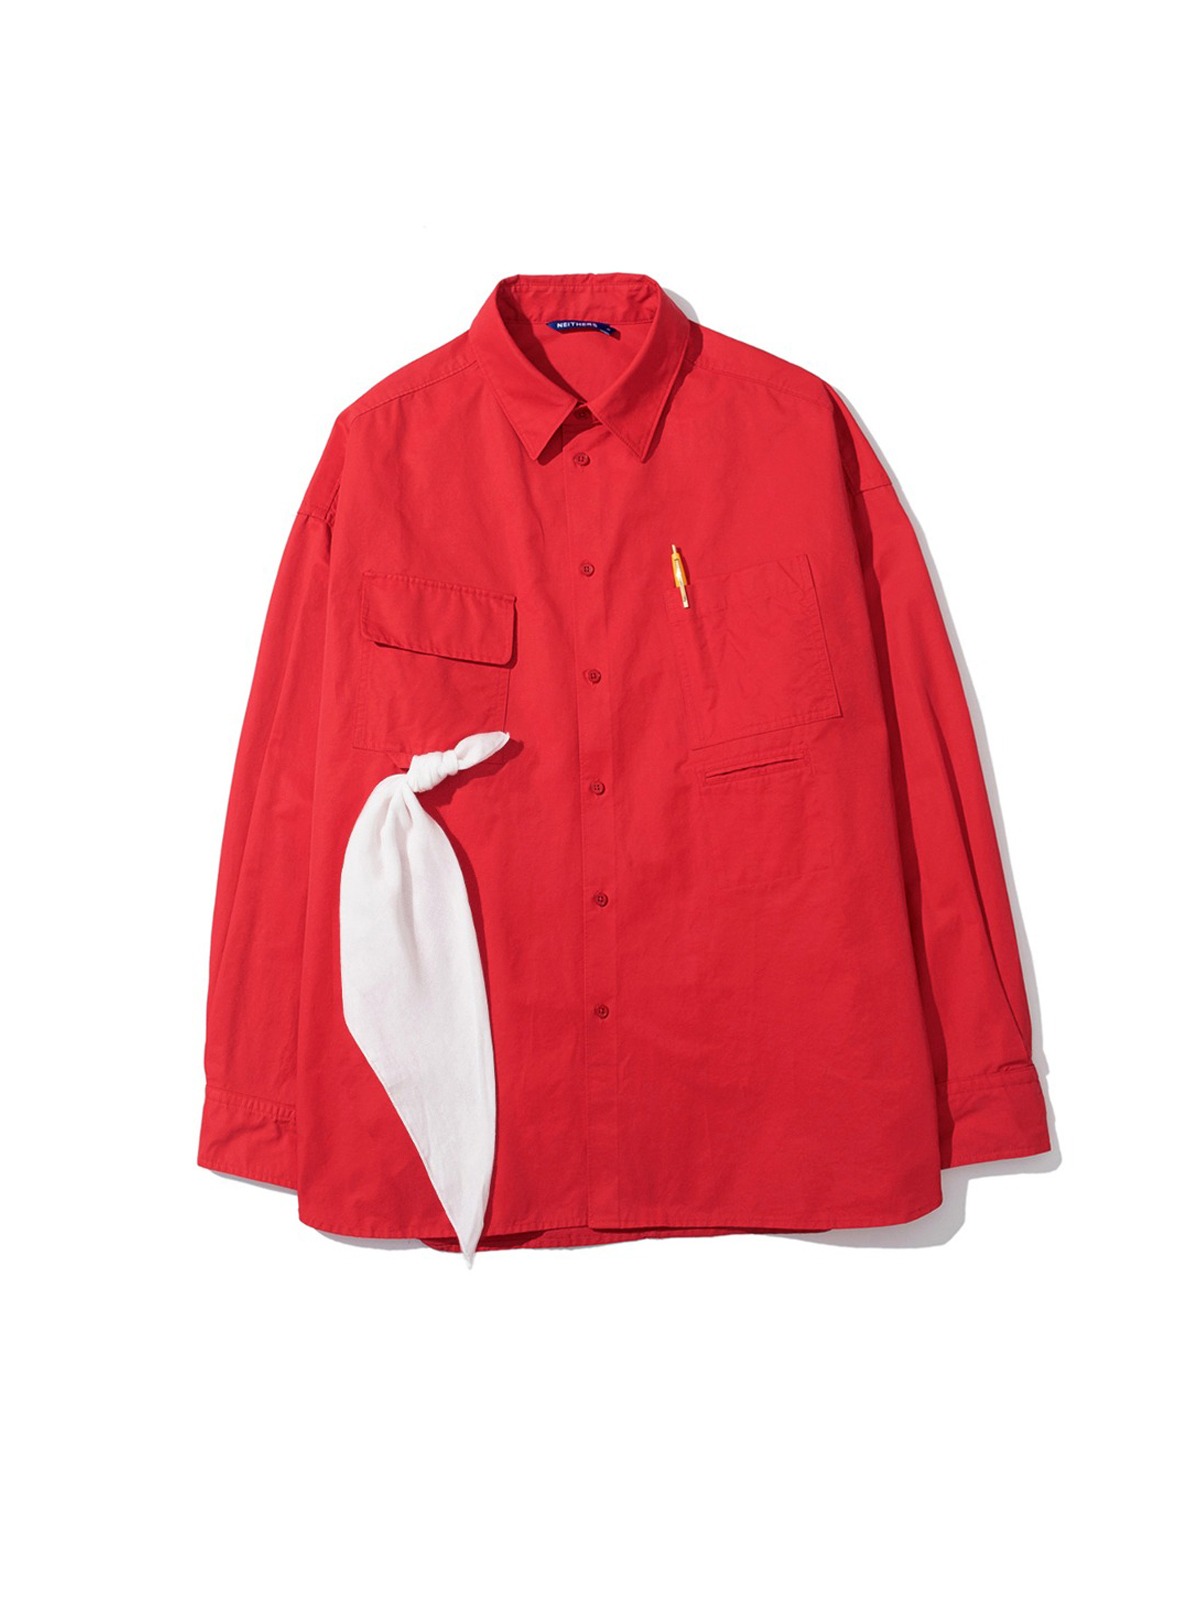 Barista Shirt (Red)